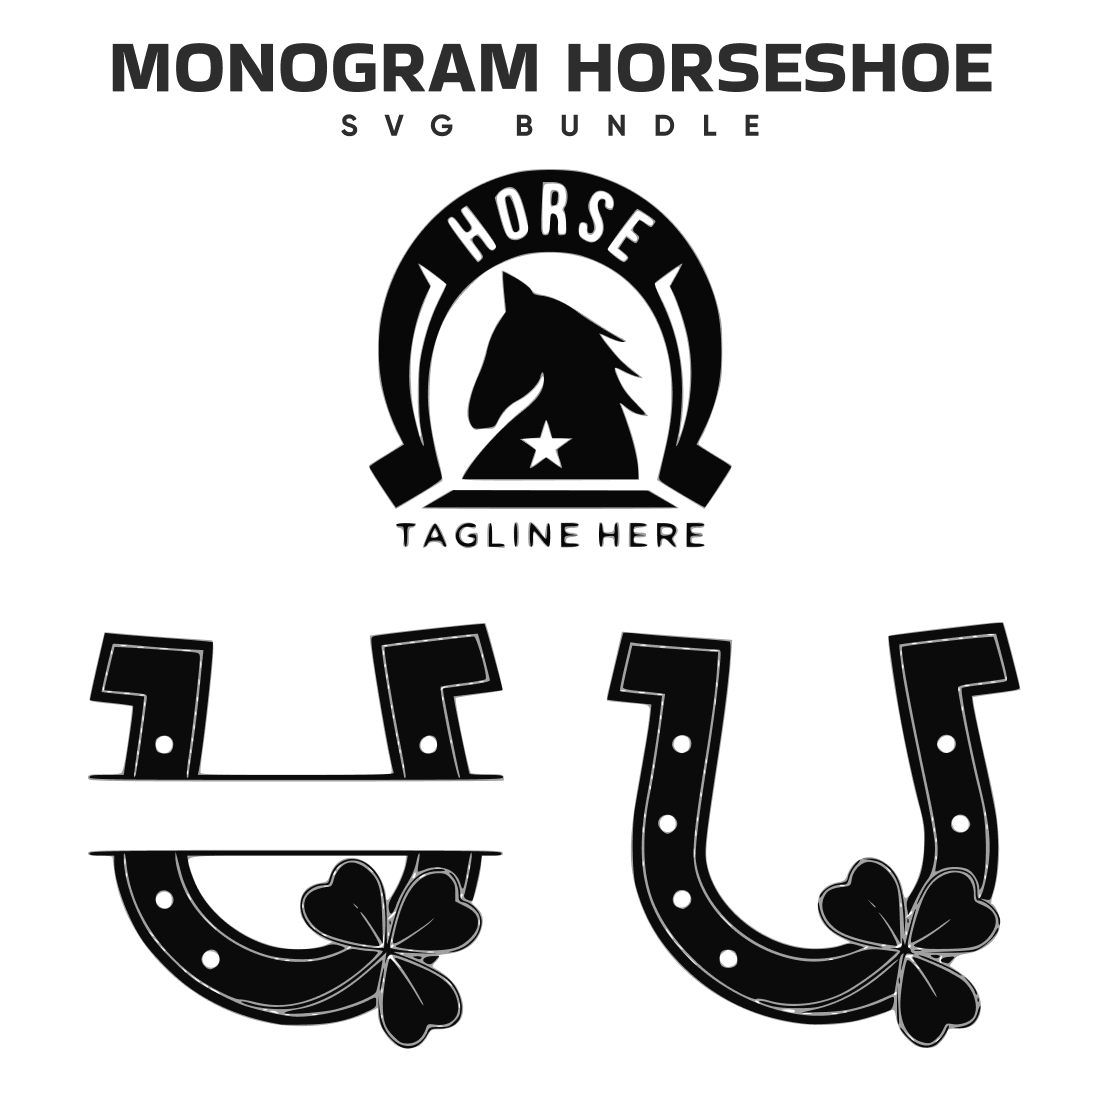 The monogram horse shoe logo.